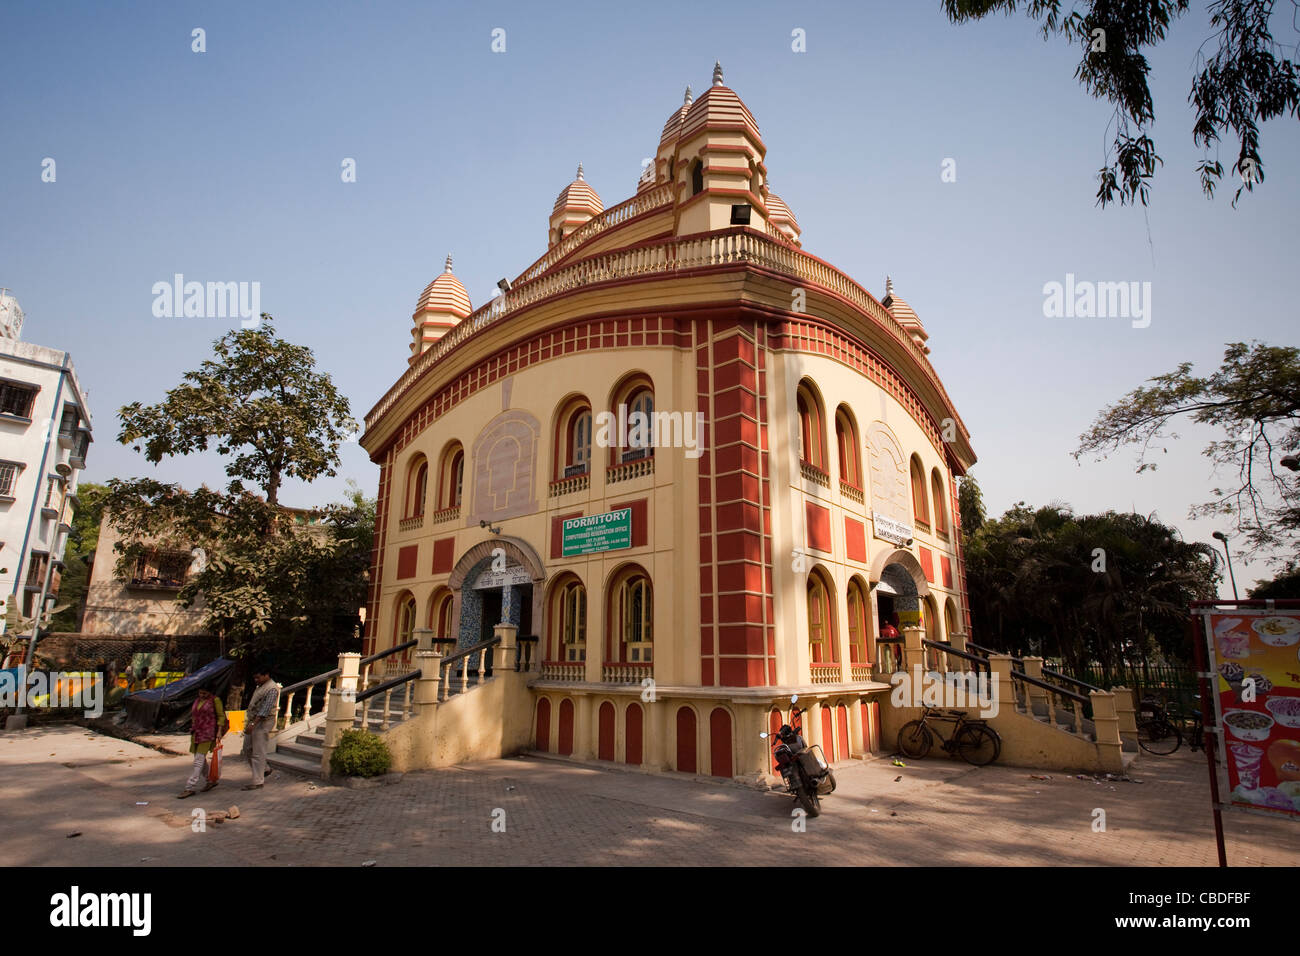 India, West Bengal, Kolkata, Dakshineswar Railway Station, unique architecture modelled on nearby Kali Temple Stock Photo